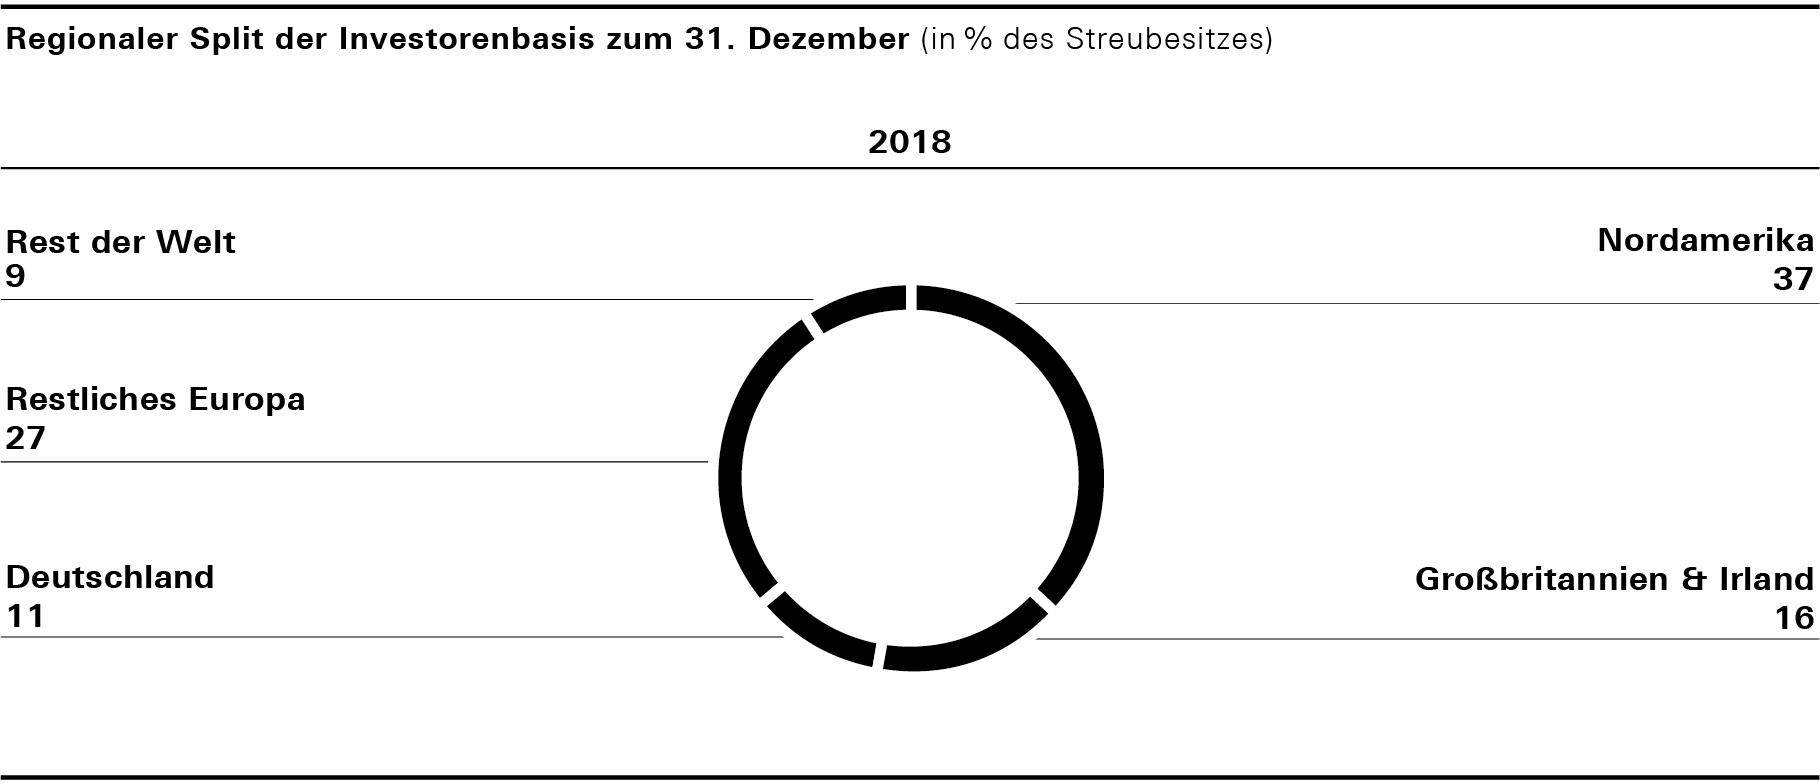 Regionaler Split der Investorenbasis zum 31. Dezember (Kreisdiagramm)